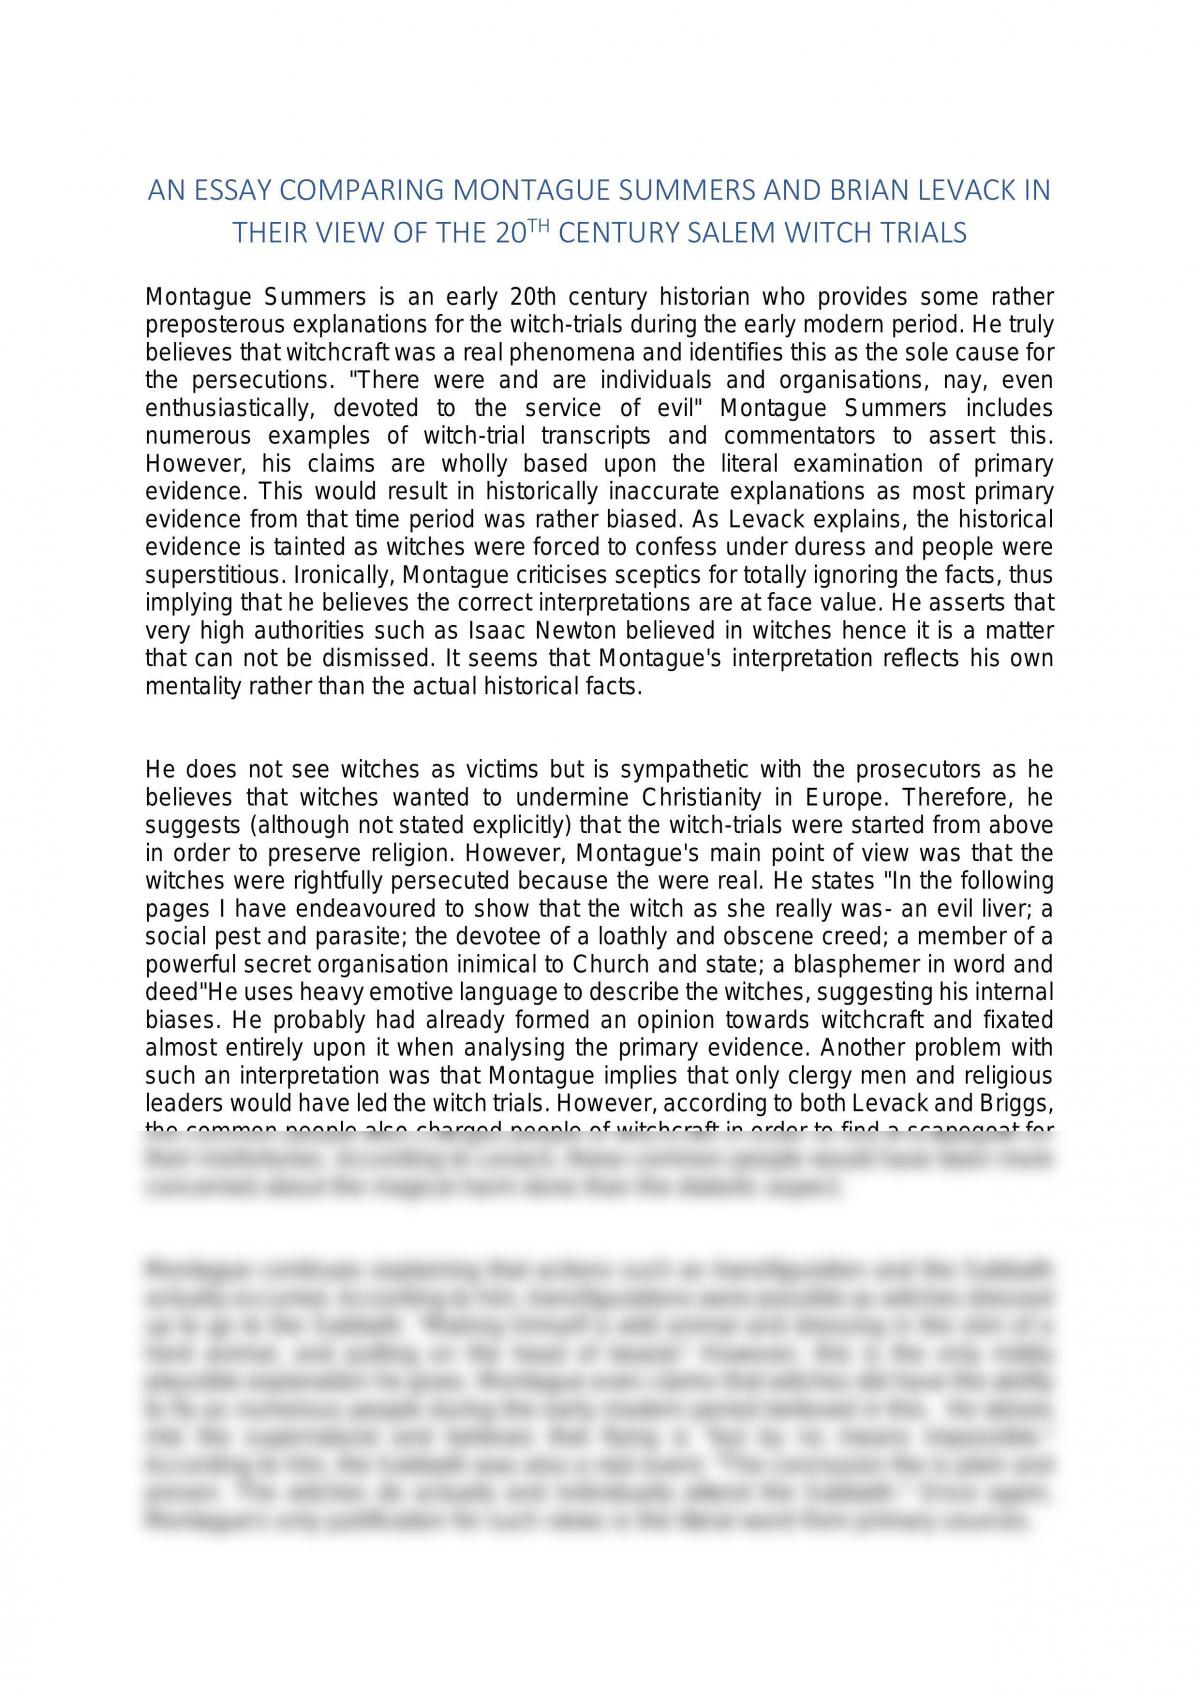 Montague Summers vs Brian Levack essay - Page 1